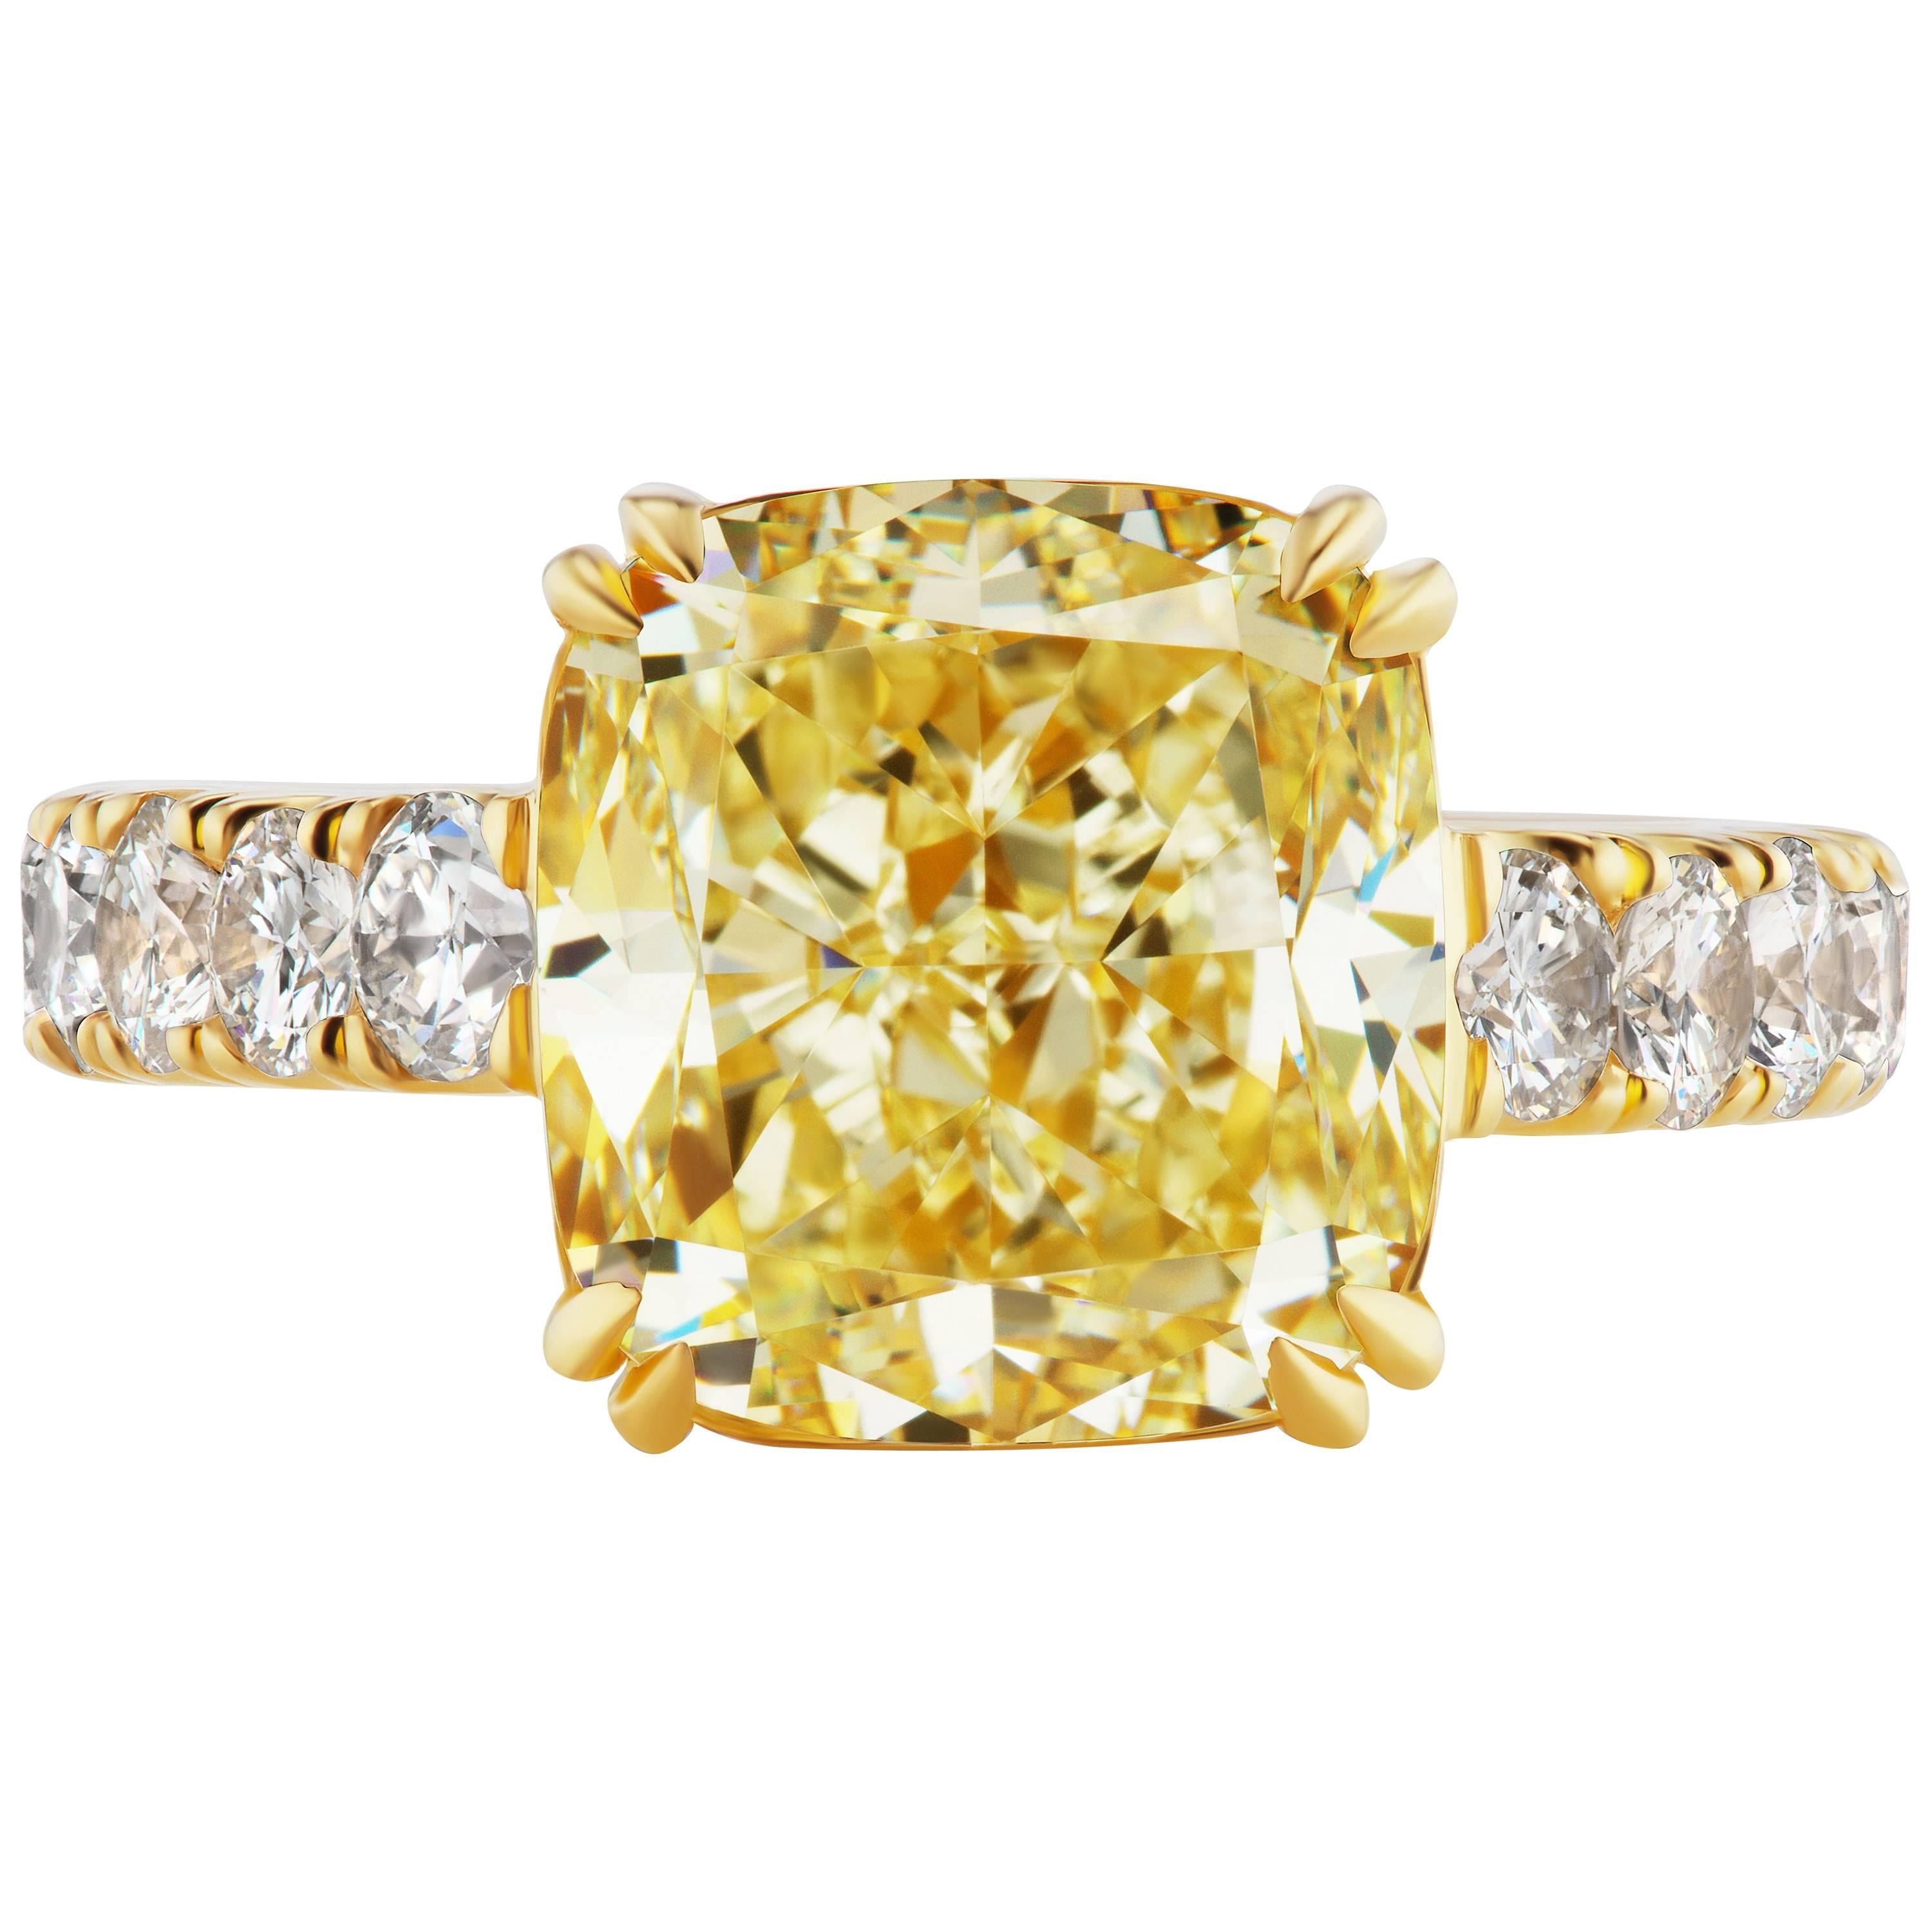 6.06 Carat Fancy Light Yellow Cushion Diamond Ring in Yellow Gold GIA